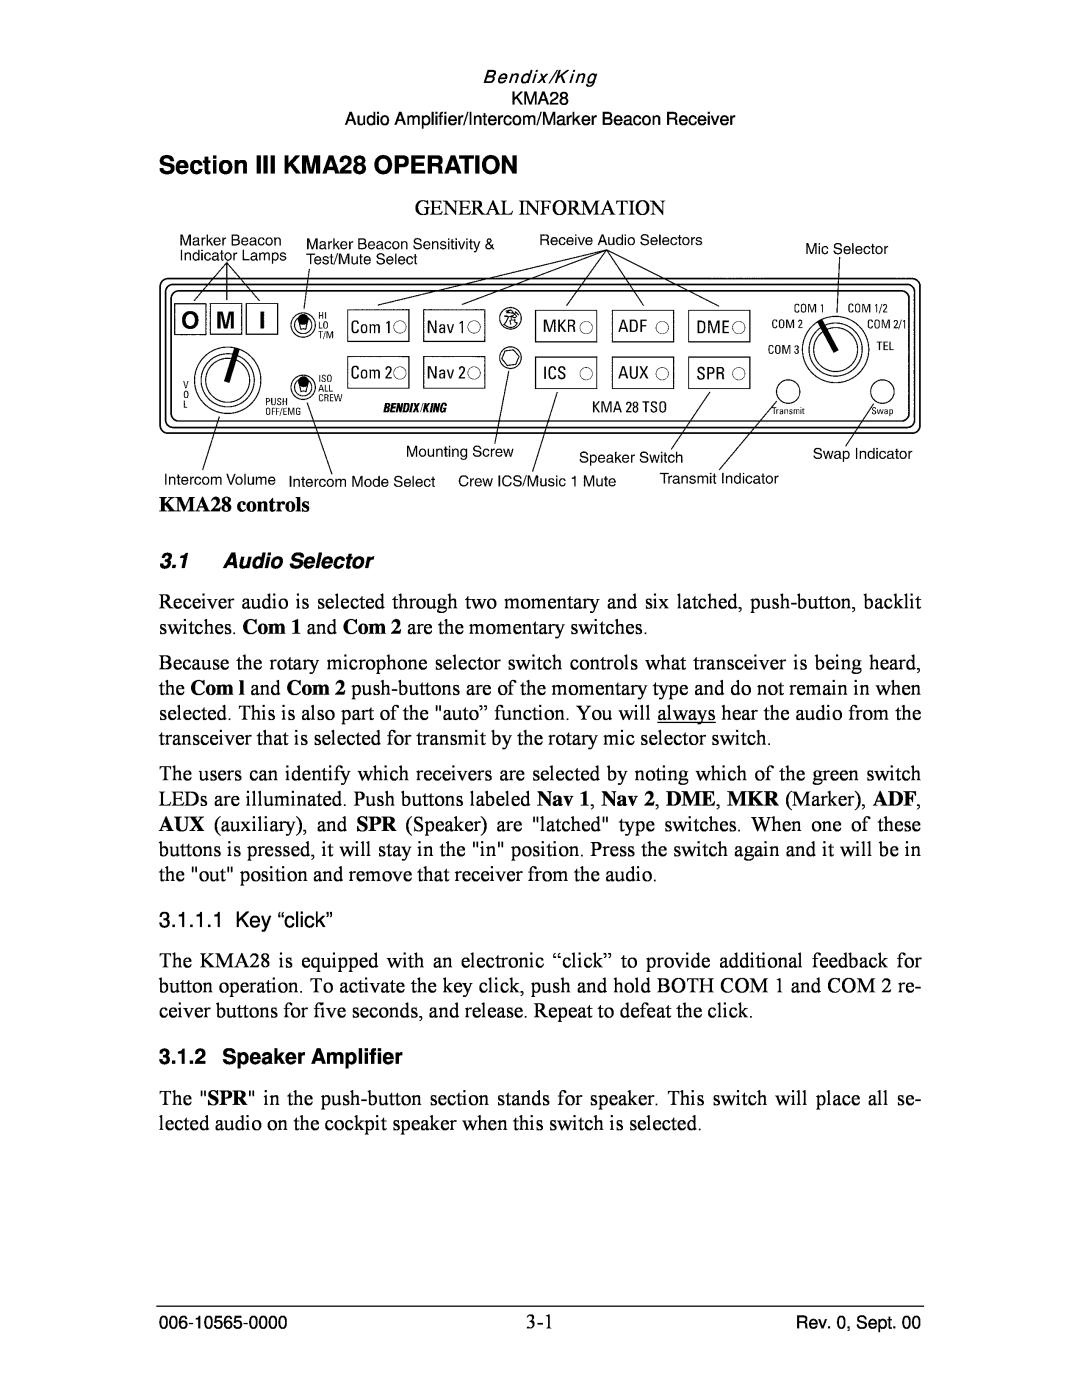 Honeywell operation manual Section III KMA28 OPERATION, KMA28 controls, Audio Selector, Speaker Amplifier 